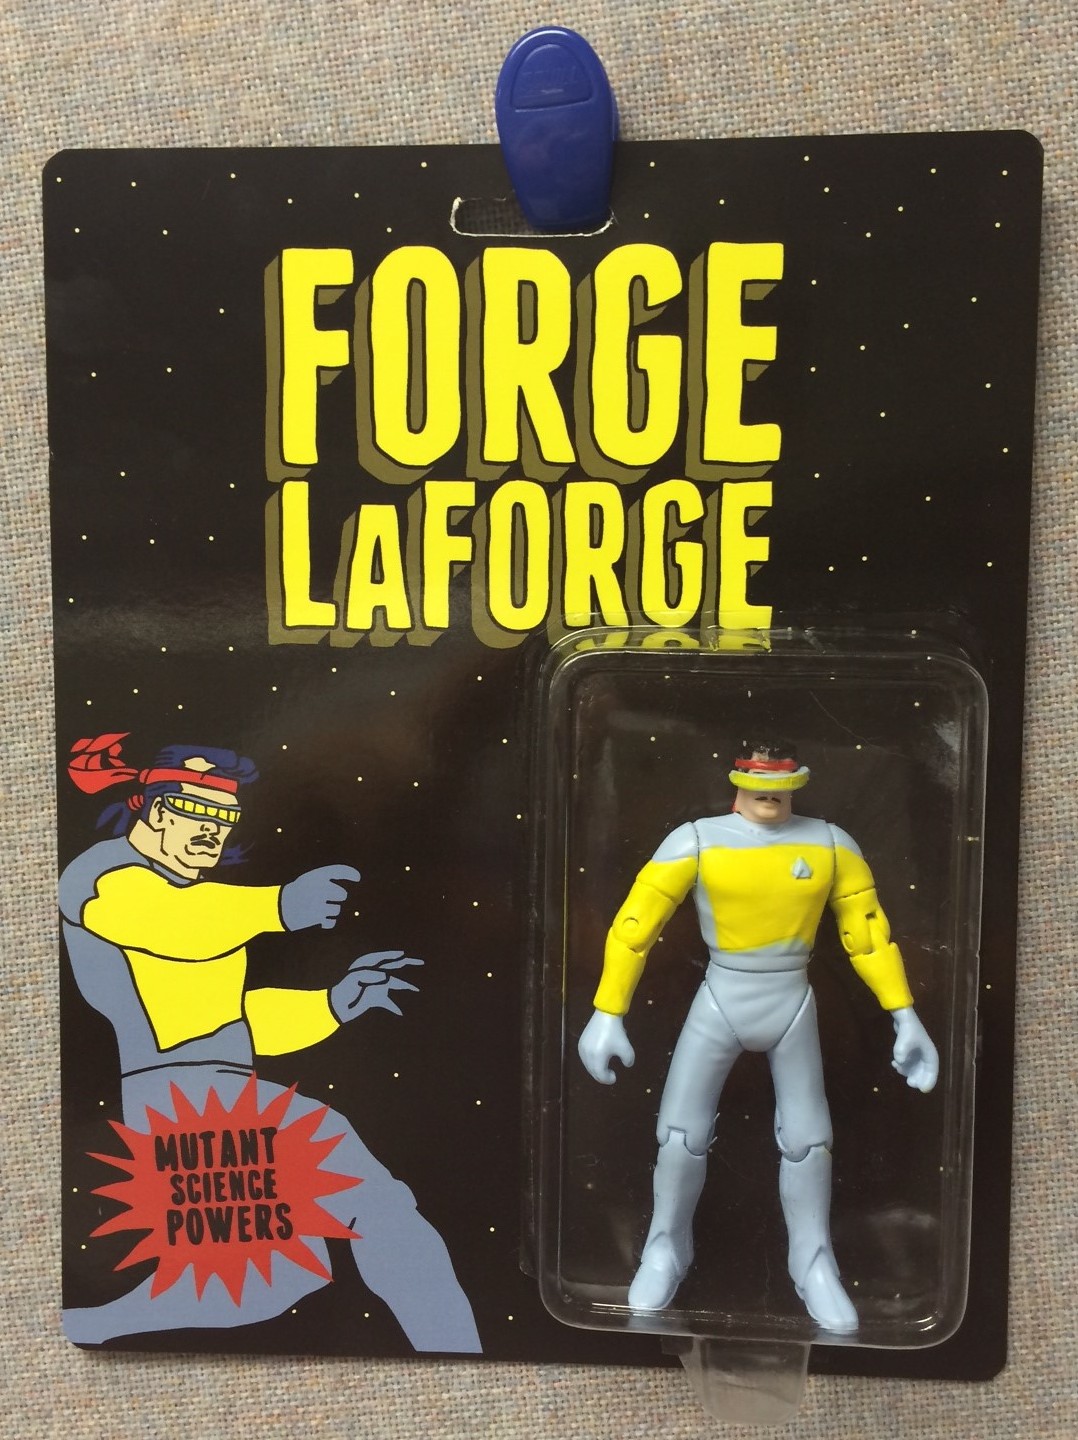 Josh_Ln_01'Forge LaForge' by Josh Ln